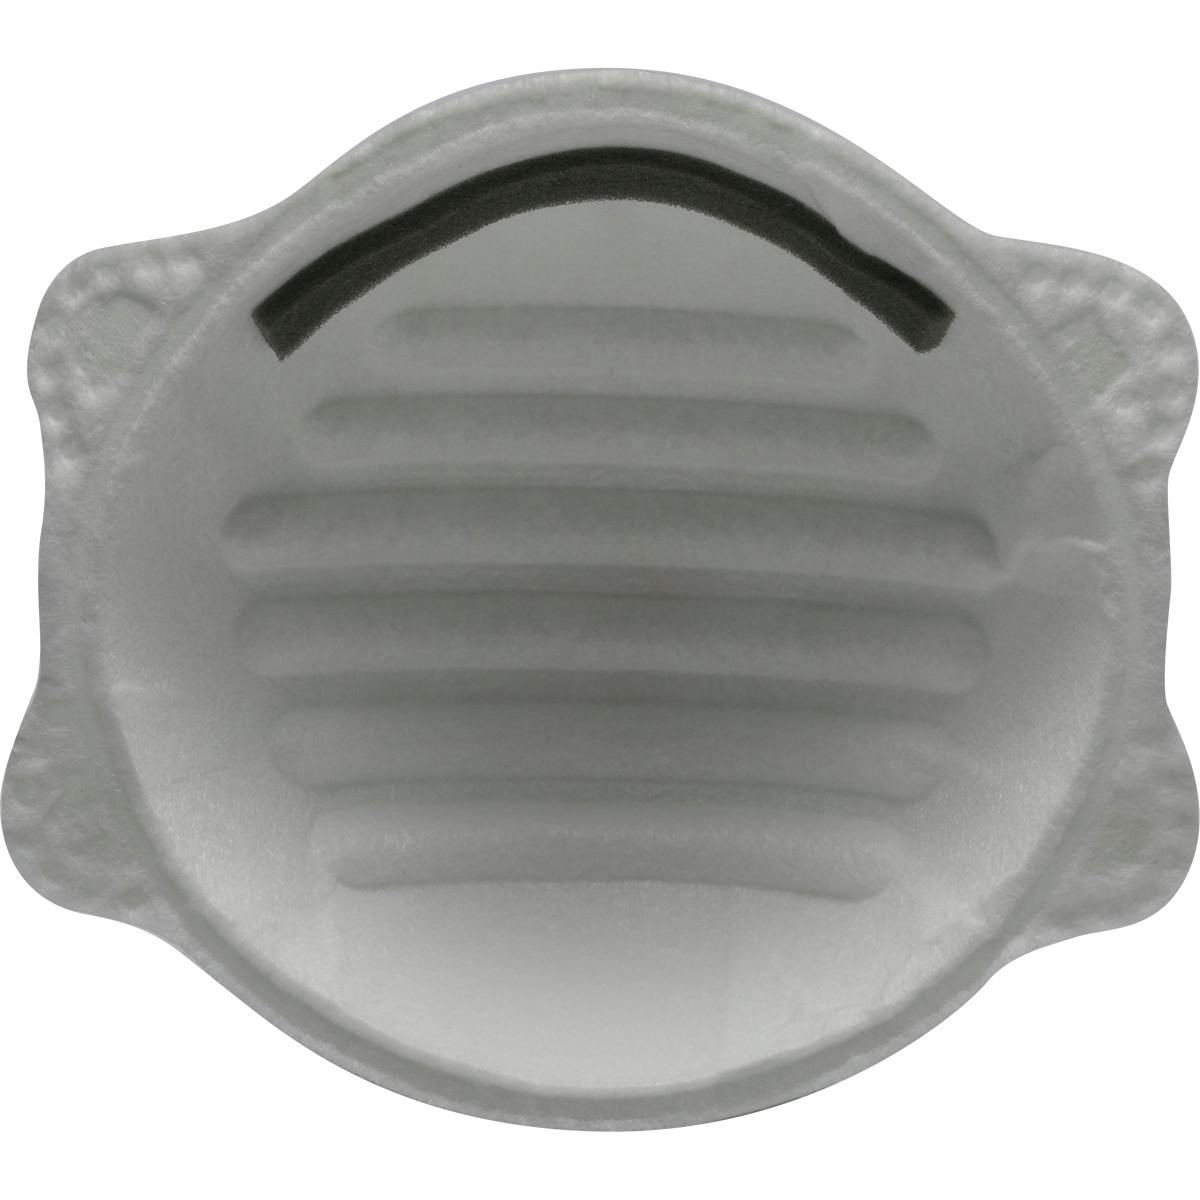 Standard N95 Disposable Respirator - 20 Pack, White (270-RPD513N95) - OS